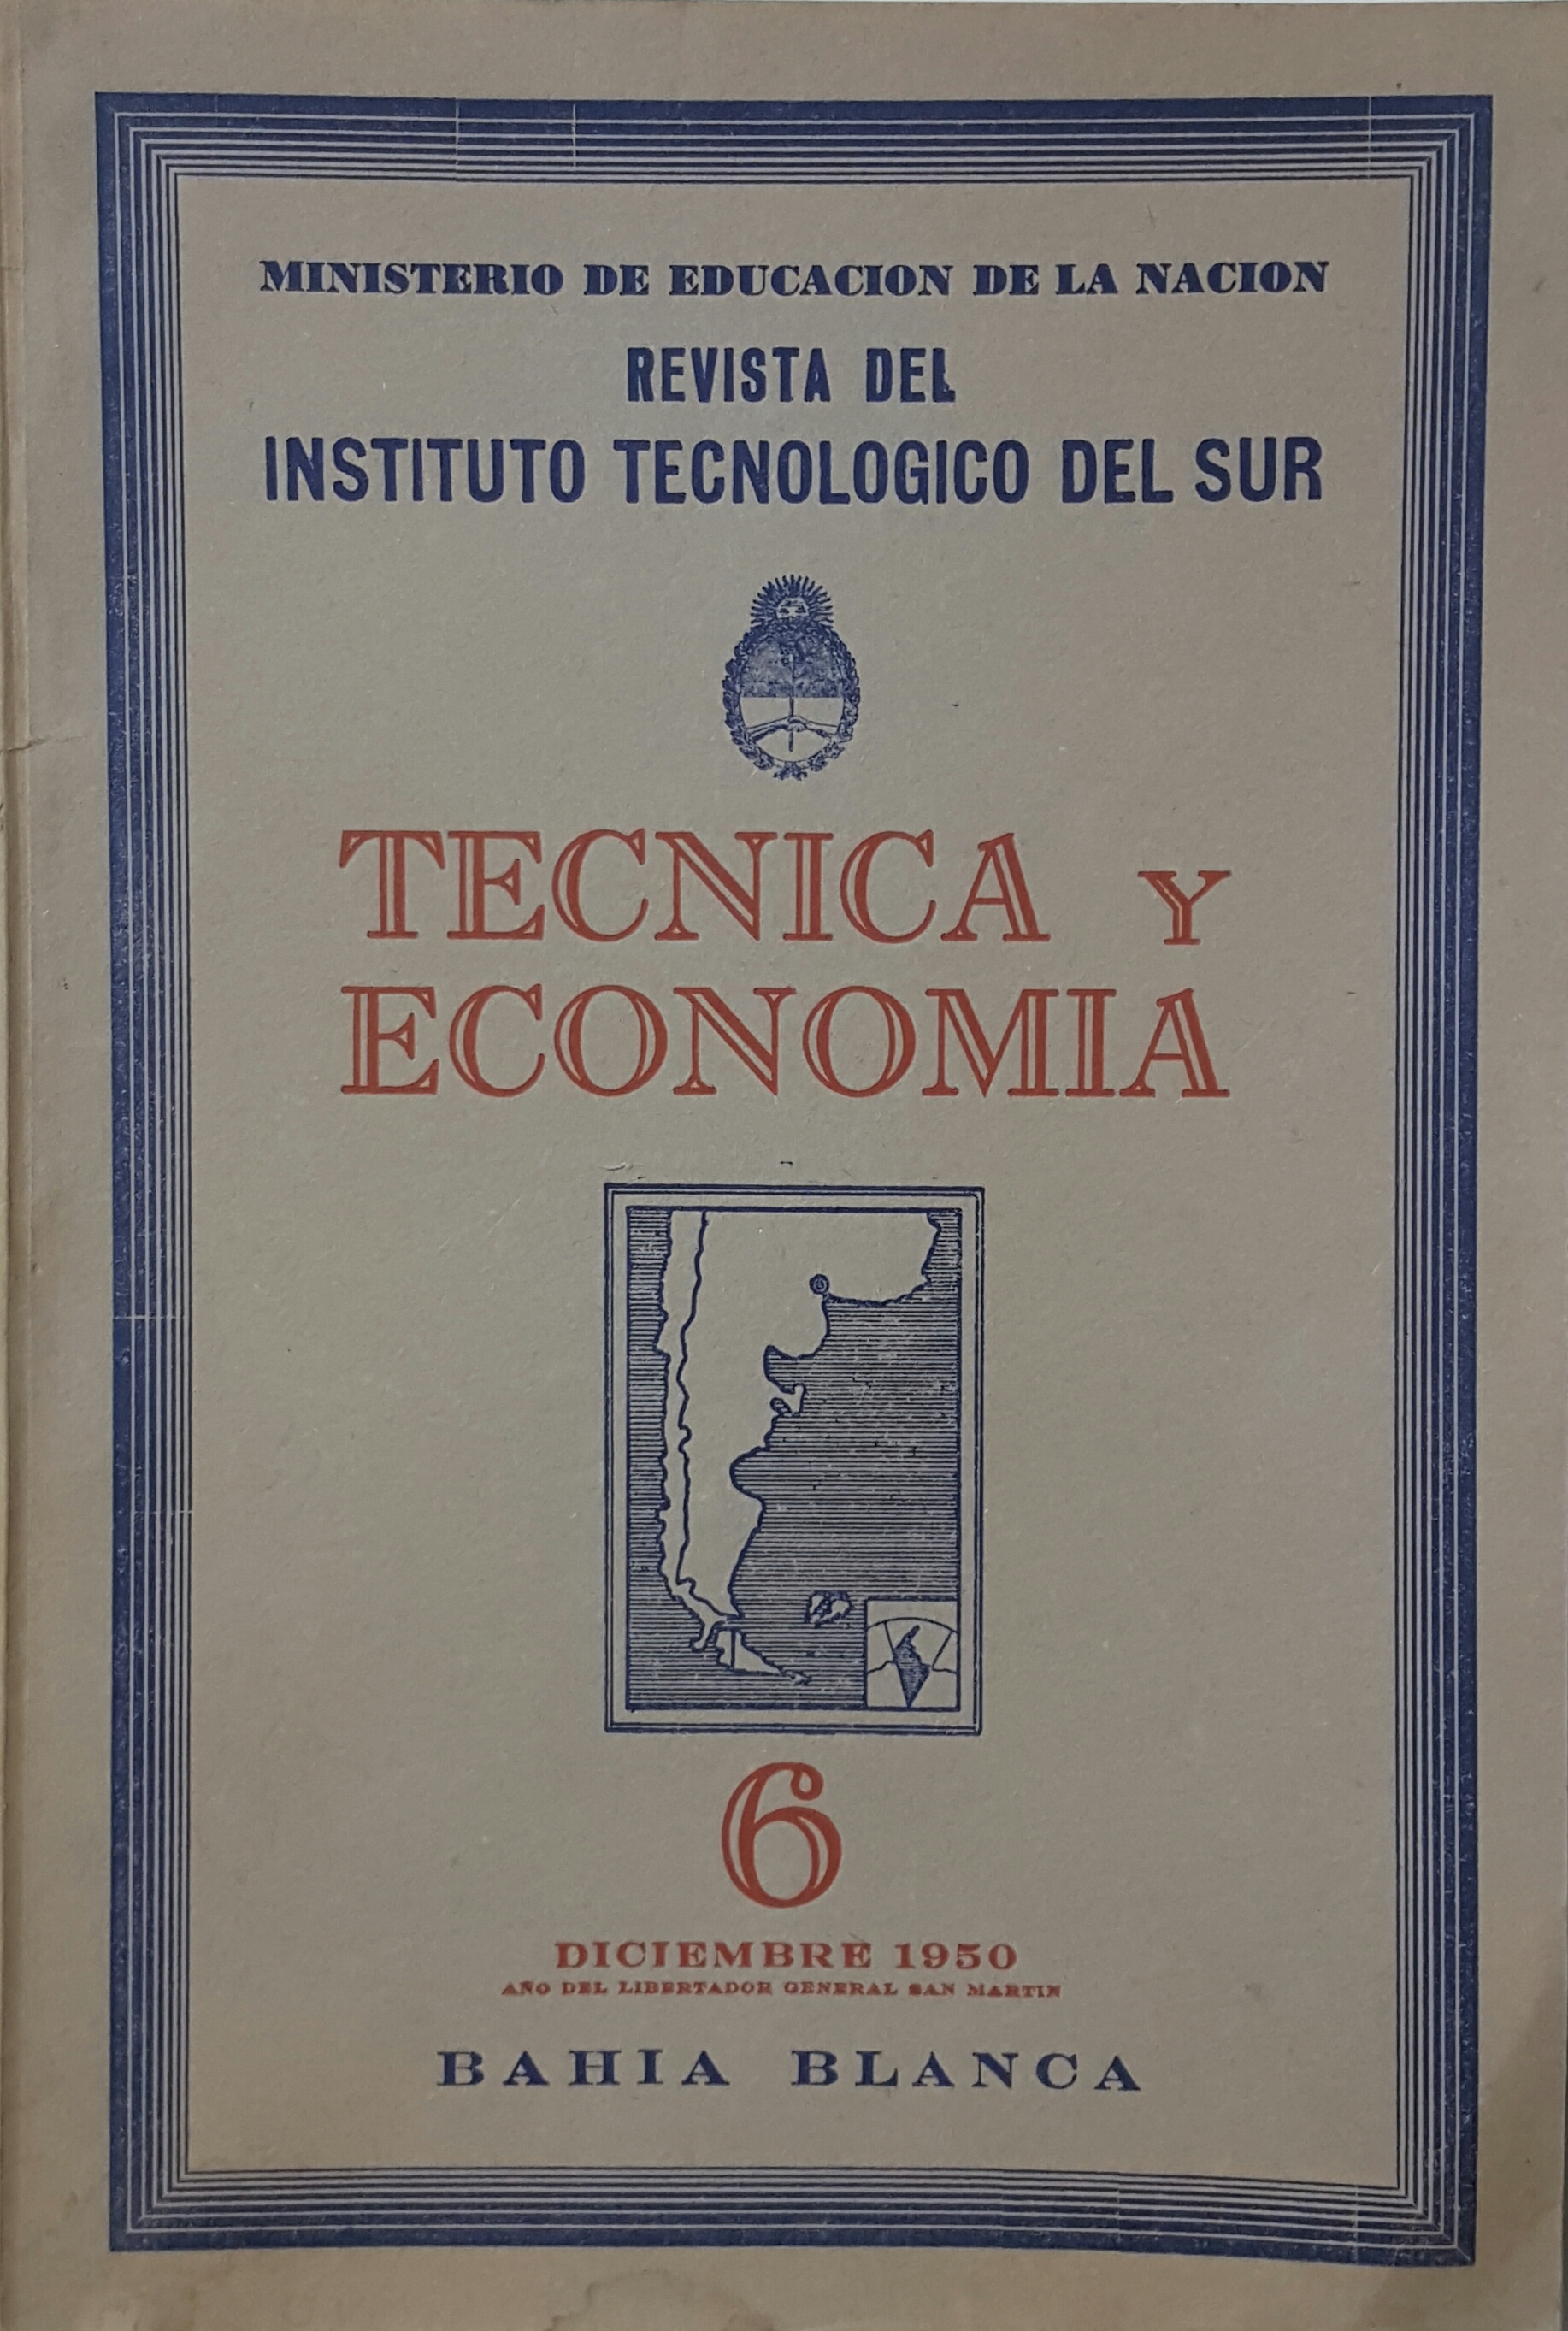 					Visualizar v. 2 n. 6 (1950): Técnica y Economía
				